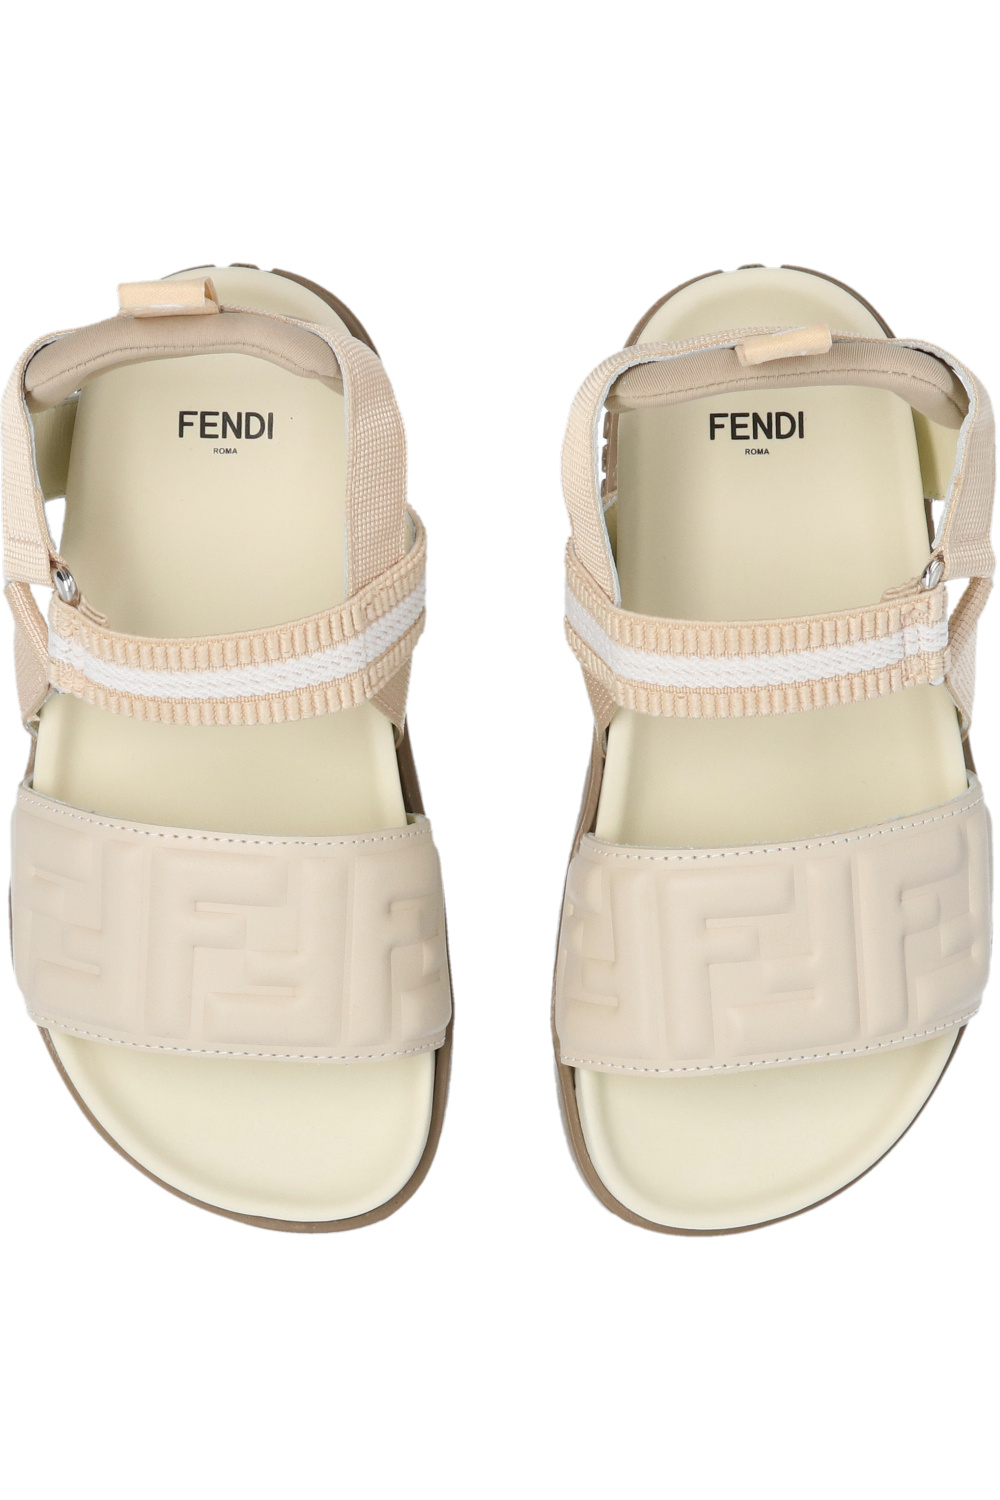 Fendi Kids Sandals with logo